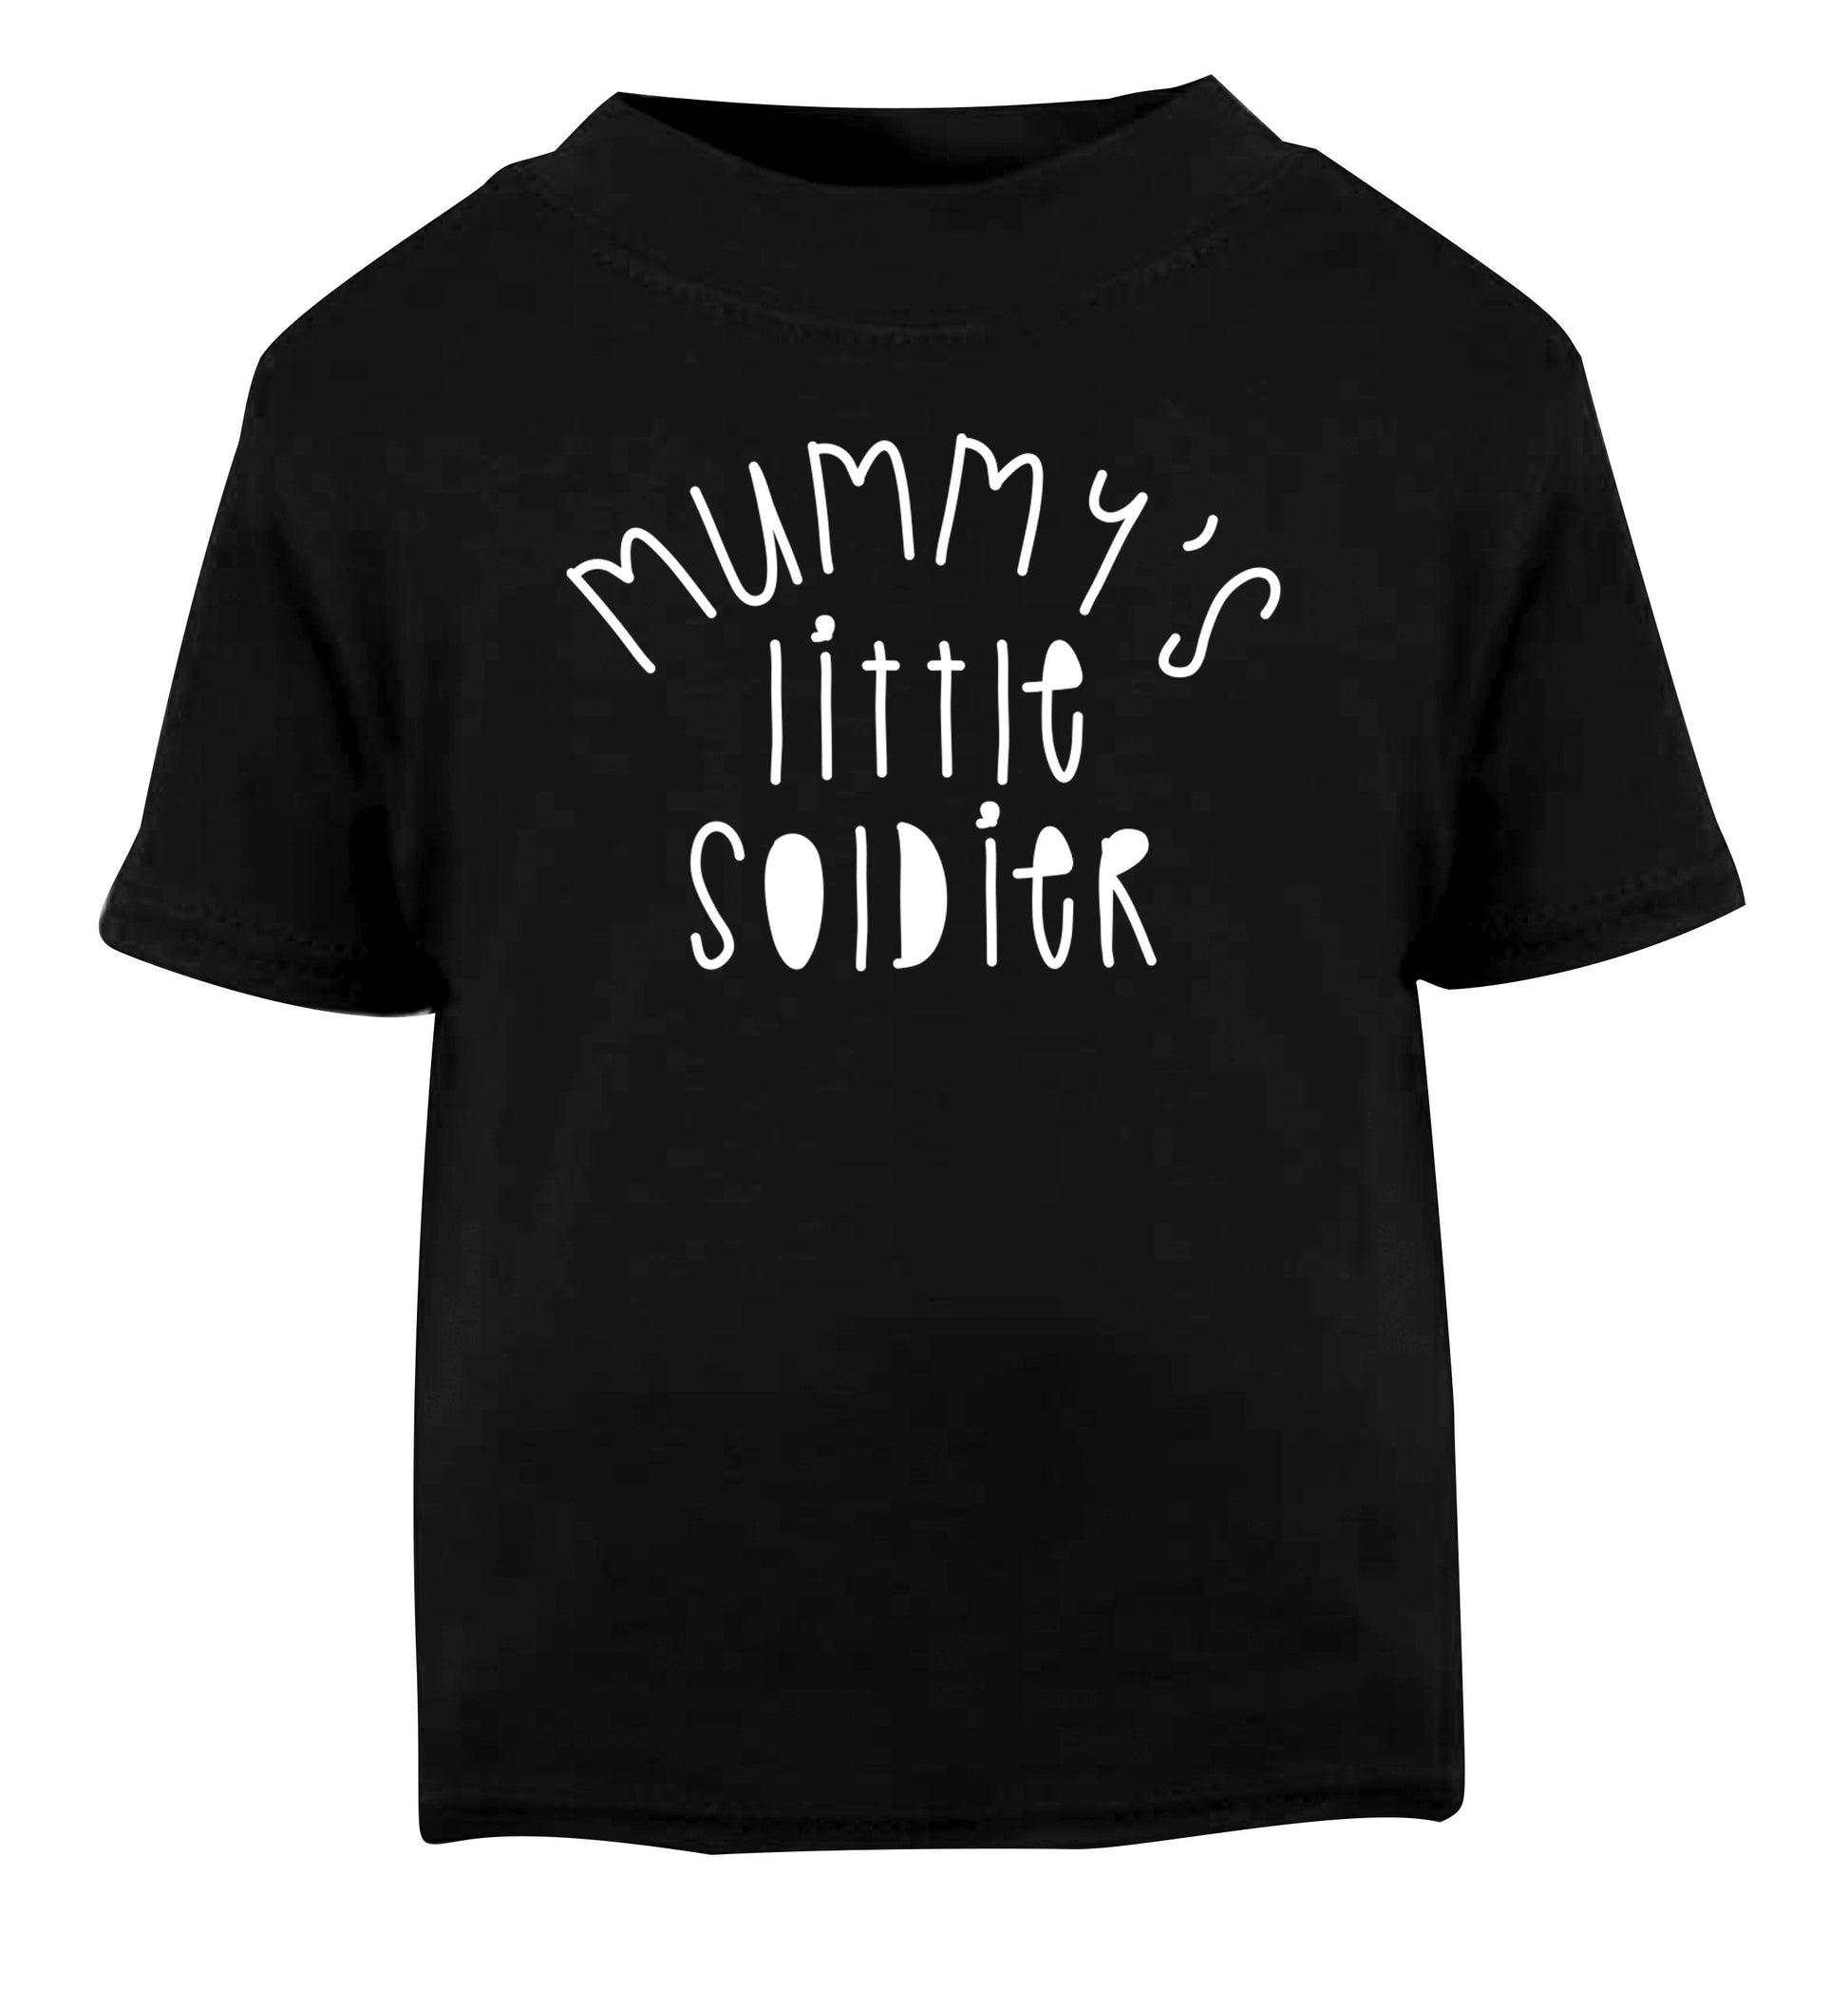 Mummy's little soldier Black Baby Toddler Tshirt 2 years